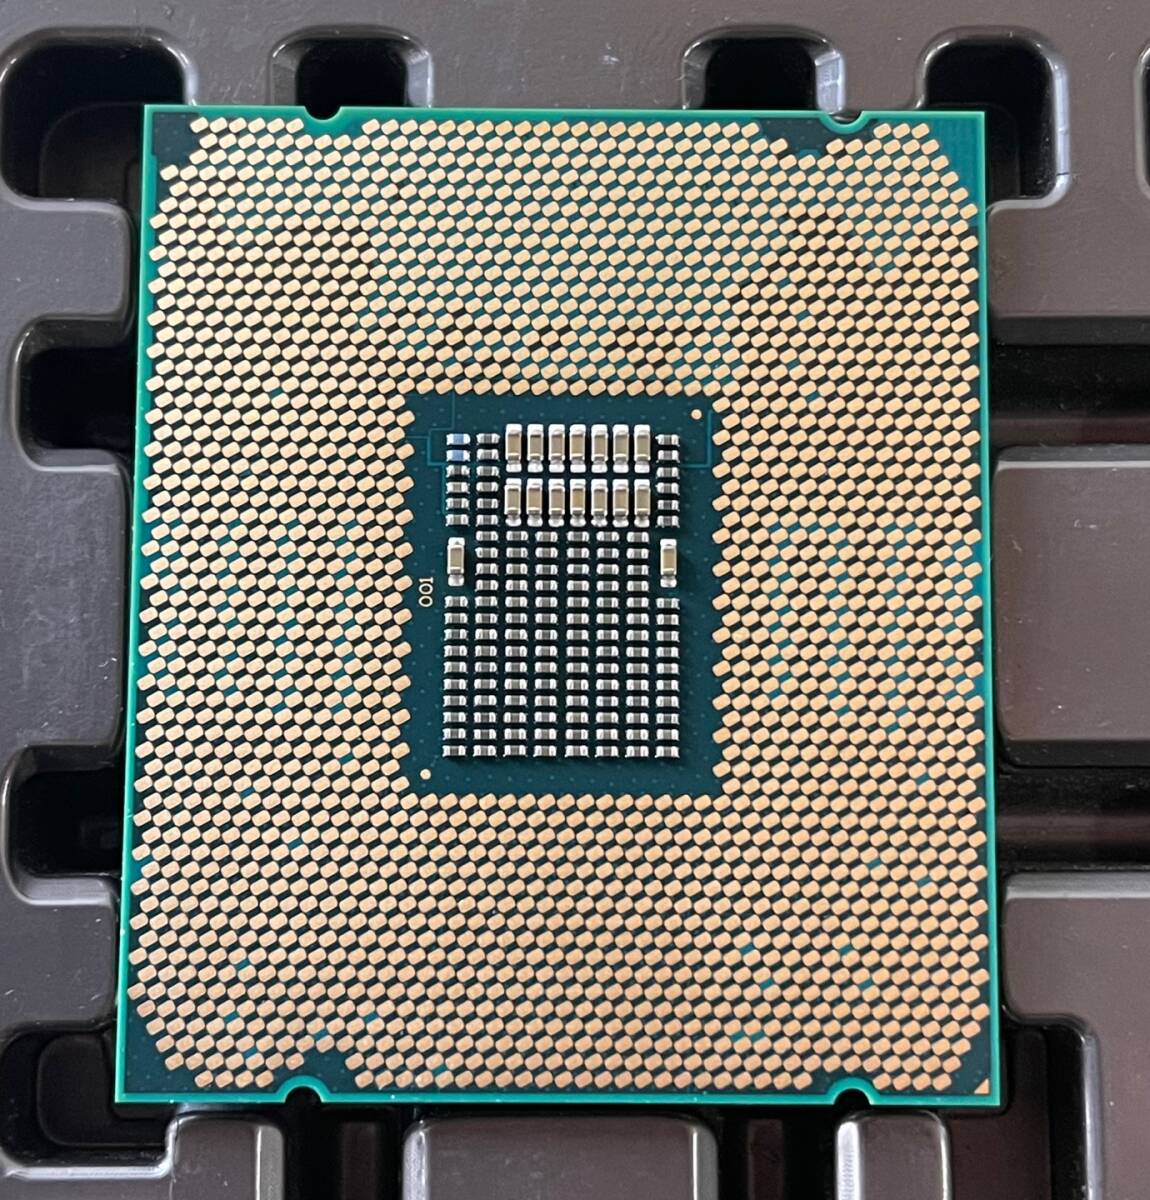 Intel Xeon W-2235 6Core 3.80GHz SRGVA CPU Processor 130W LGA2066